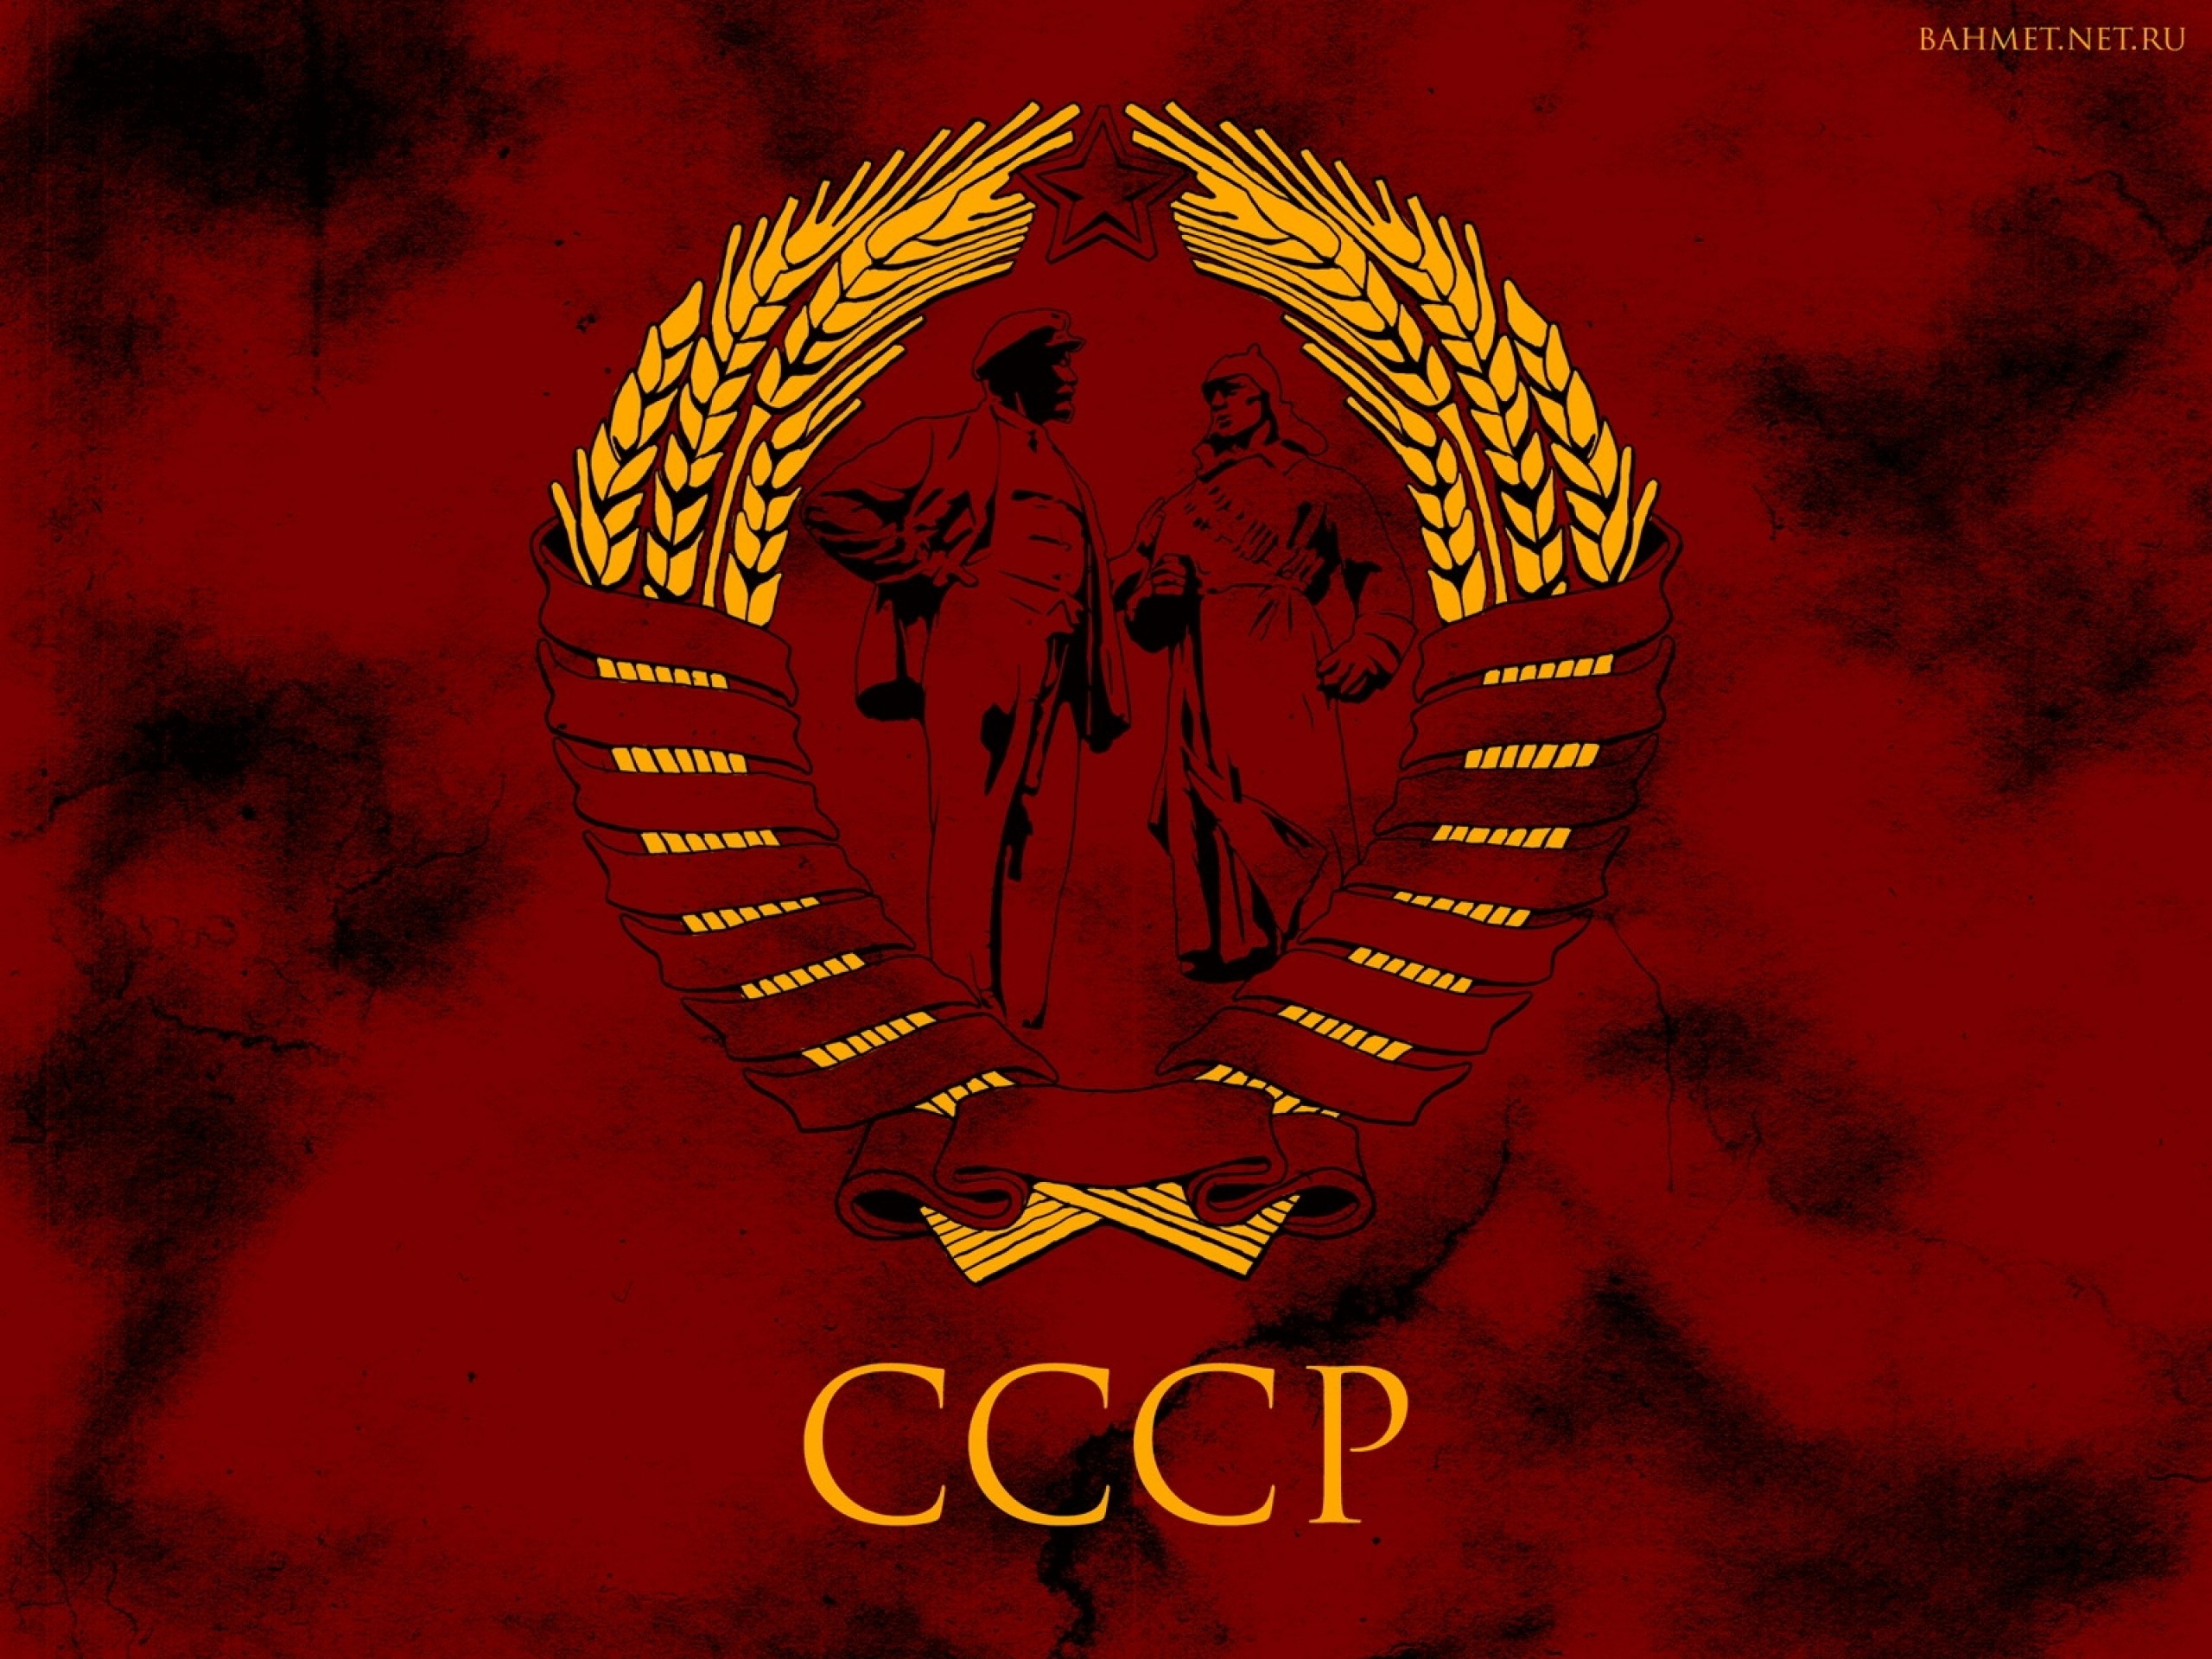 cccp壁紙,赤,フォント,象徴,グラフィックス,グラフィックデザイン